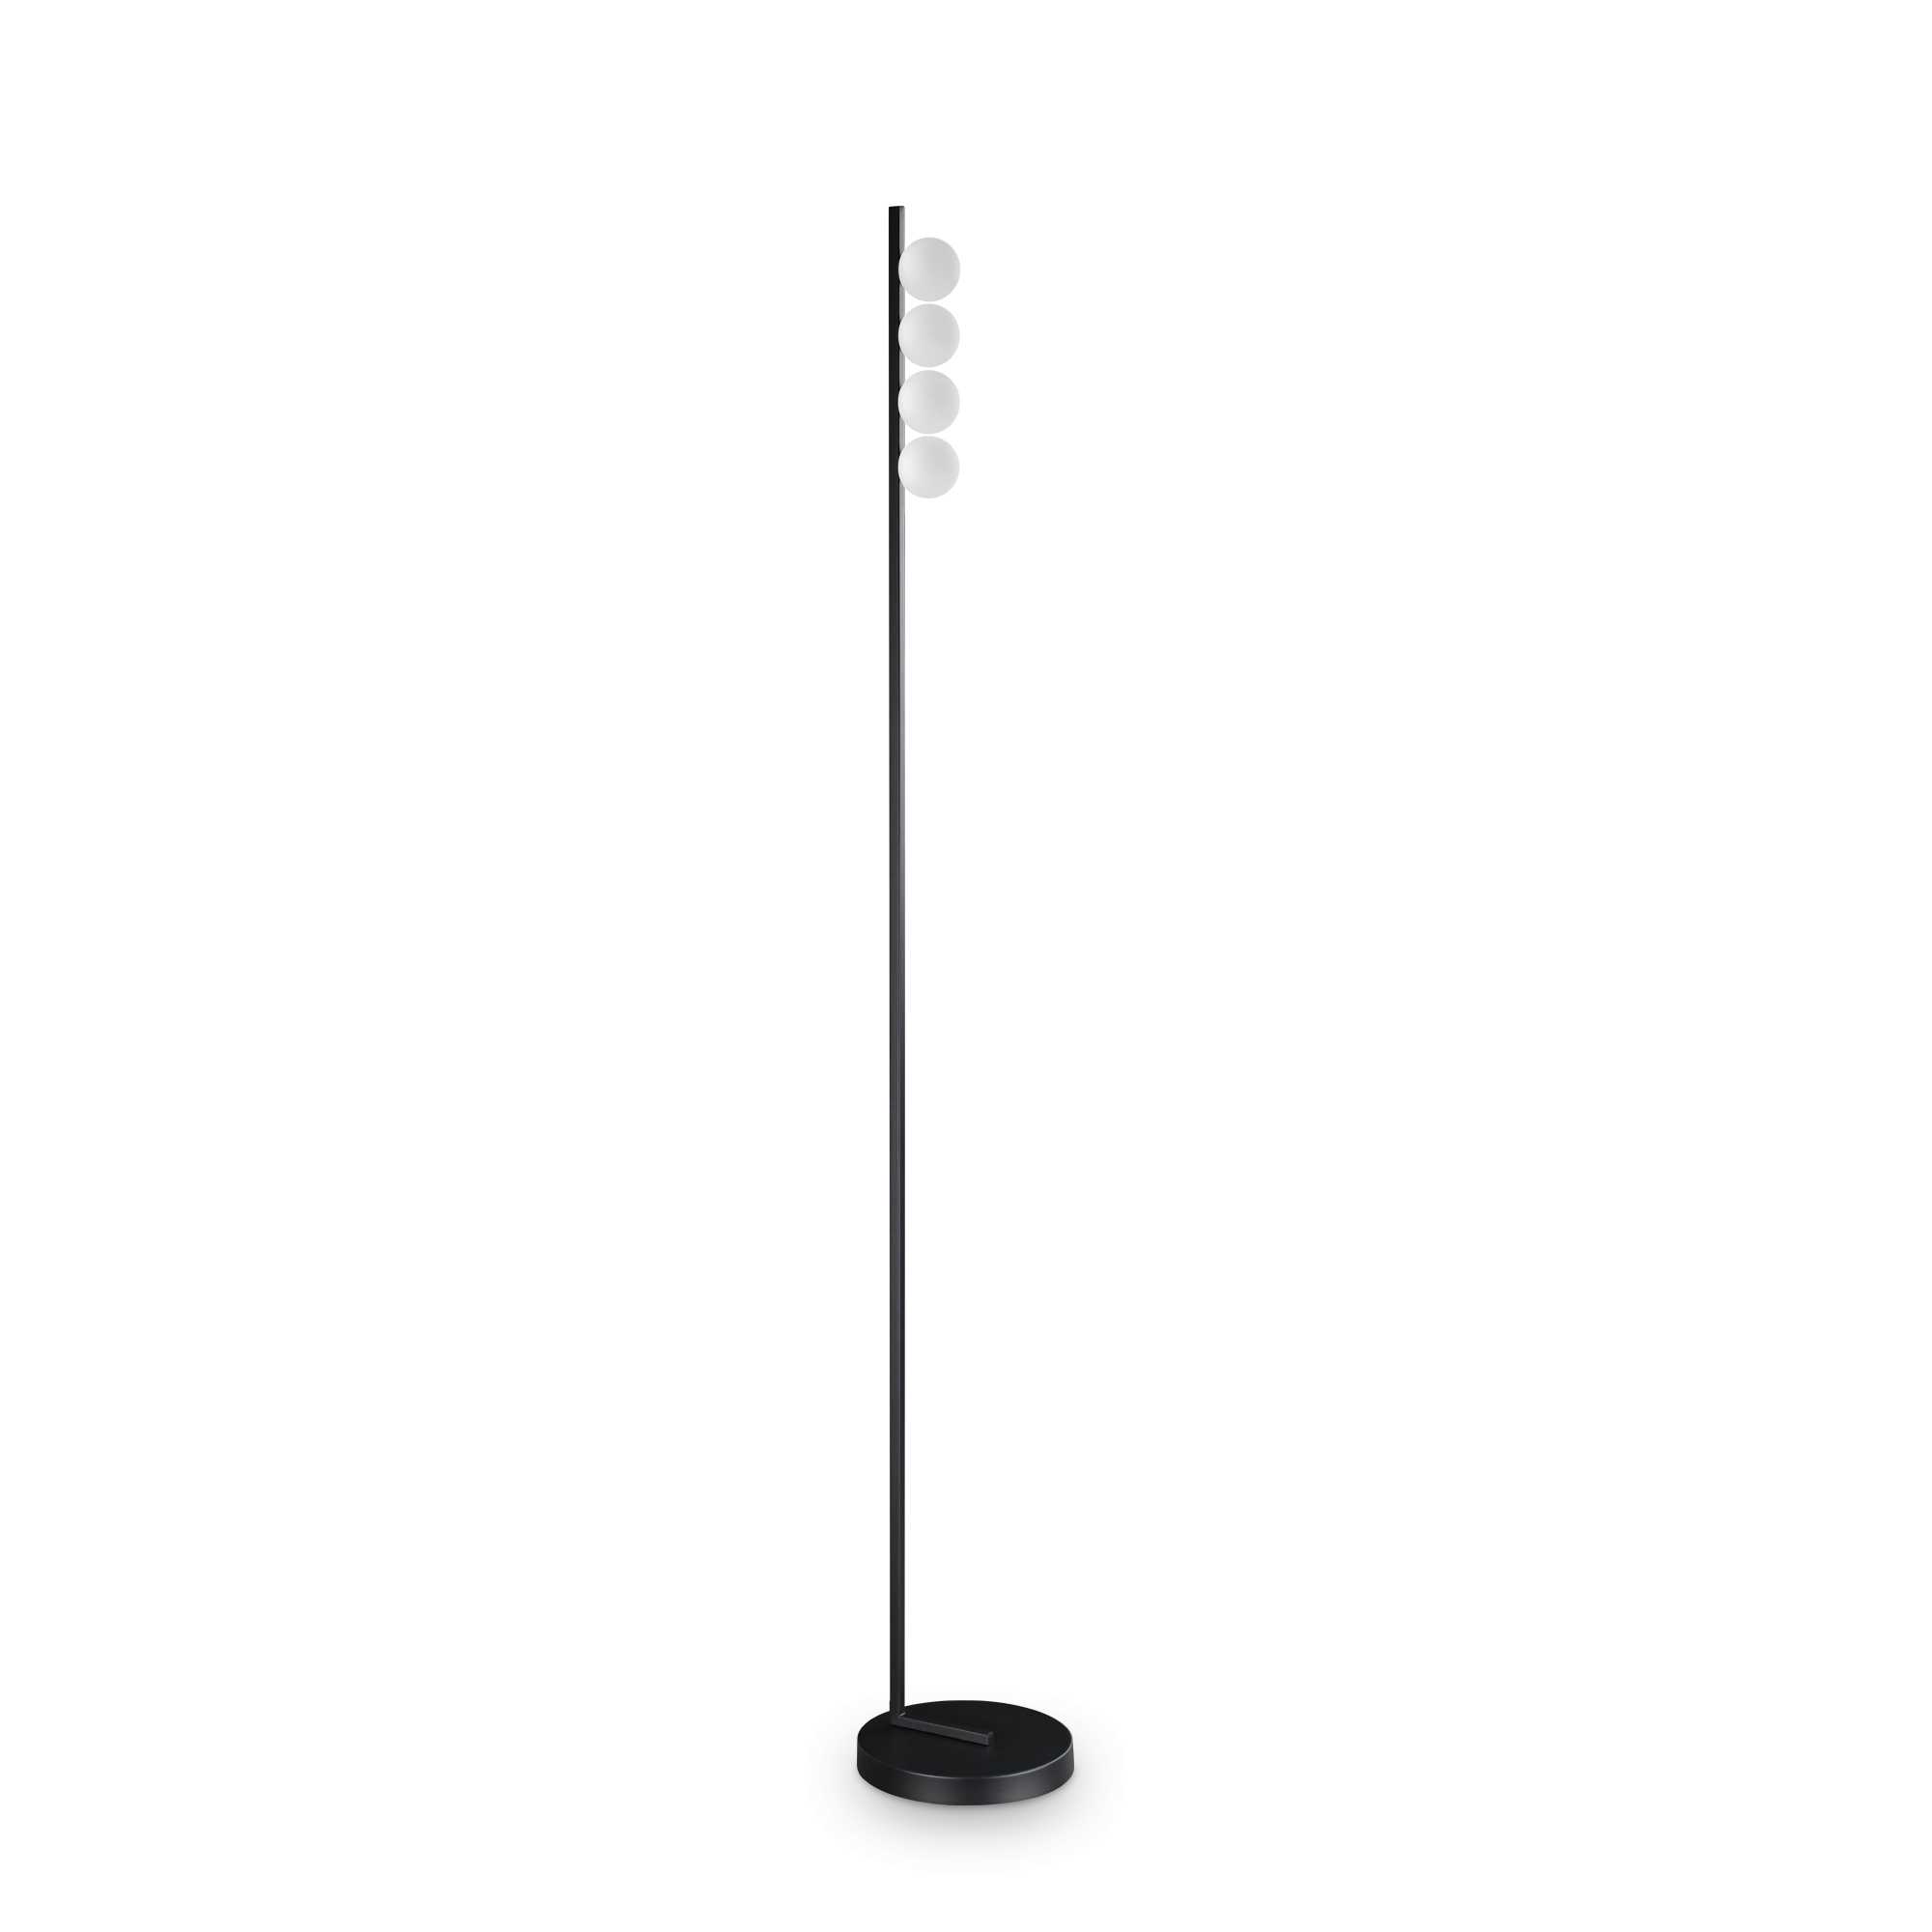 AD hotelska oprema Podna lampa Ping pong pt4- Crna boja slika proizvoda